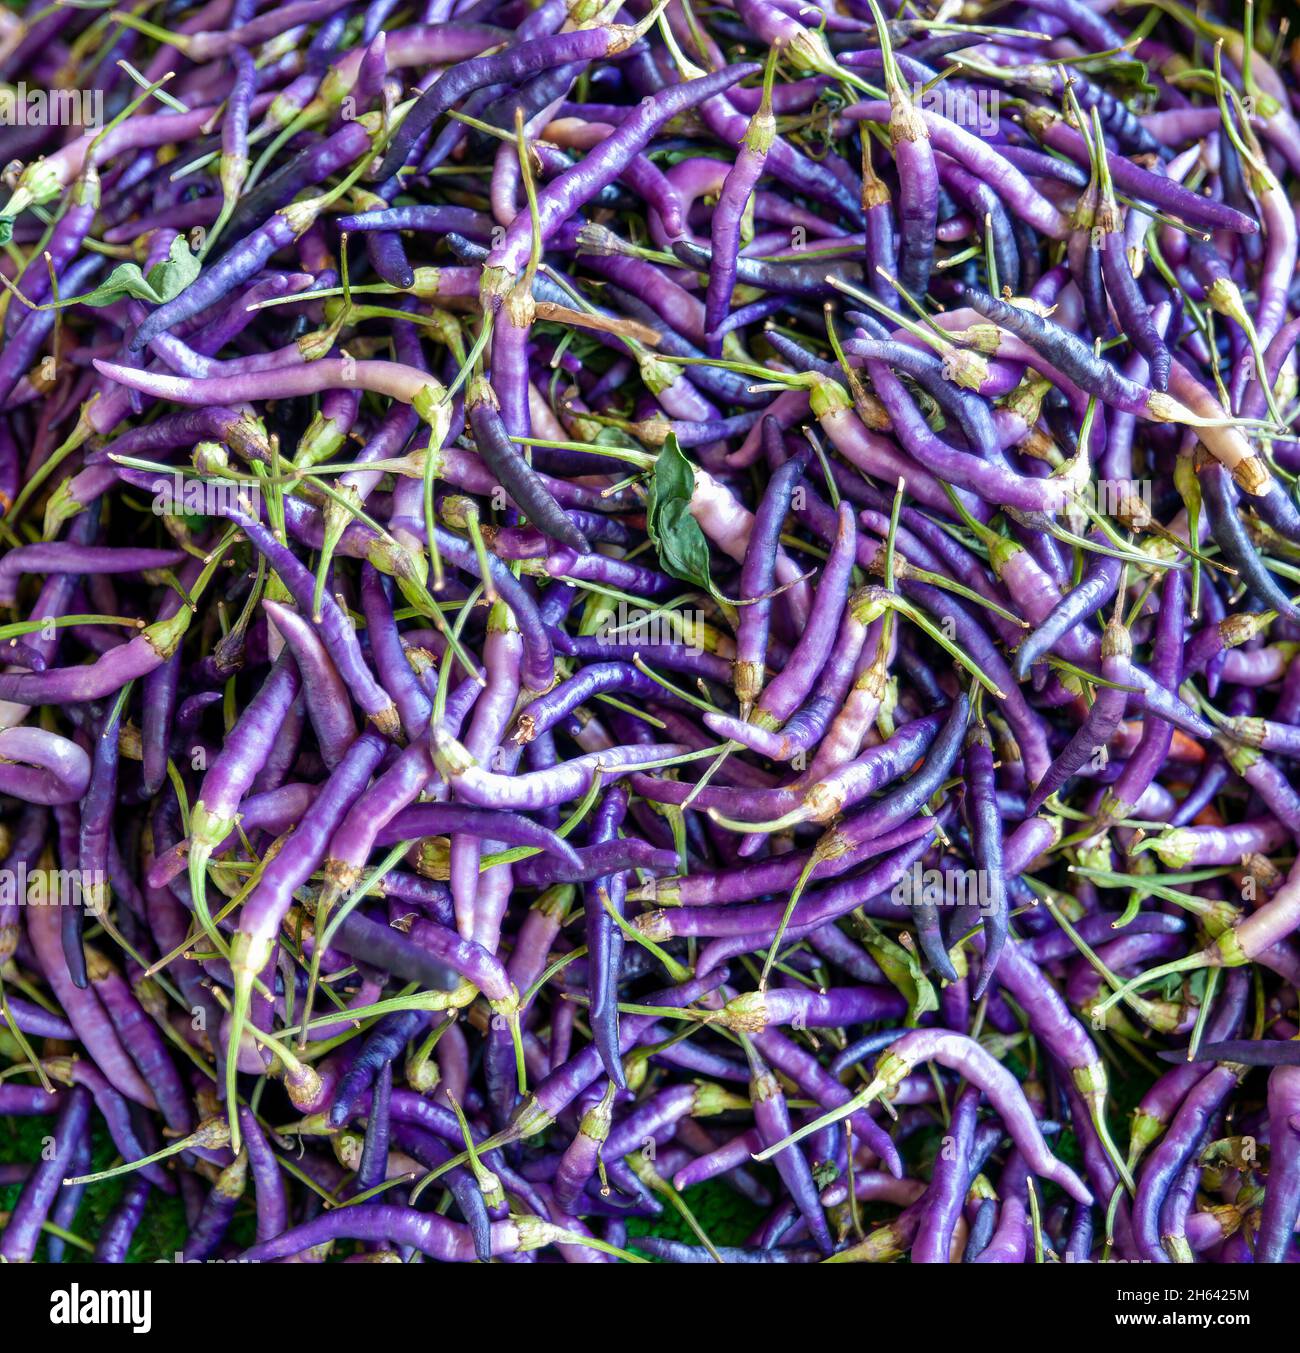 purple chili peppers in the vegetable market in muratpasa,antalya,turkey  Stock Photo - Alamy